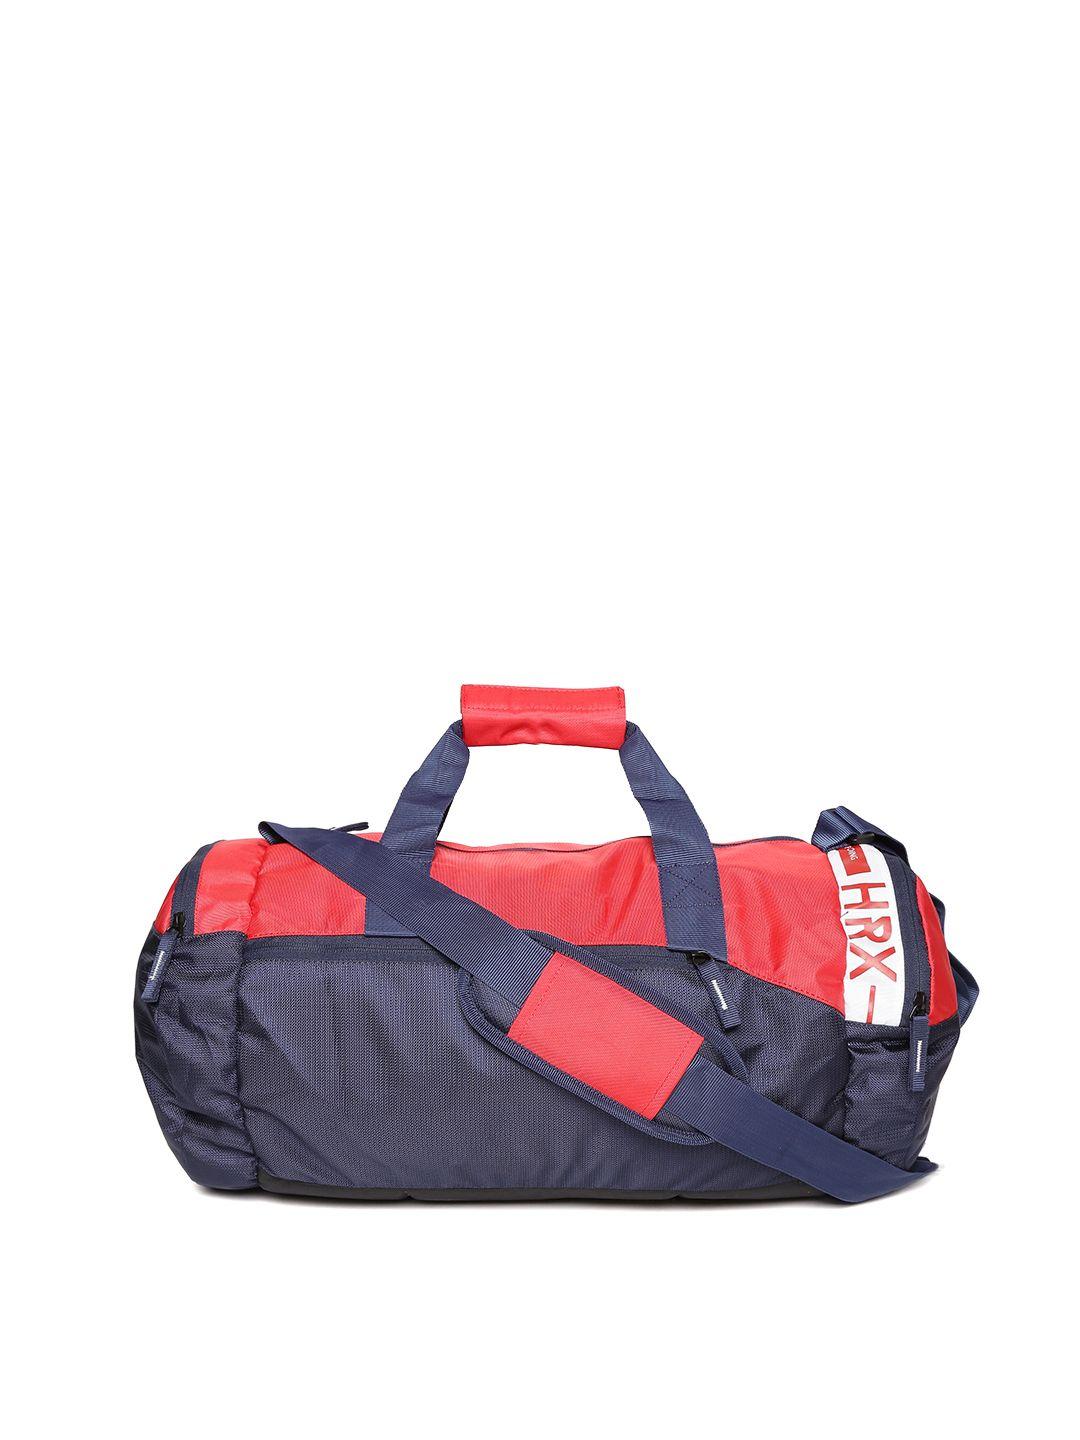 hrx by hrithik roshan unisex red & navy blue colourblocked training duffel bag